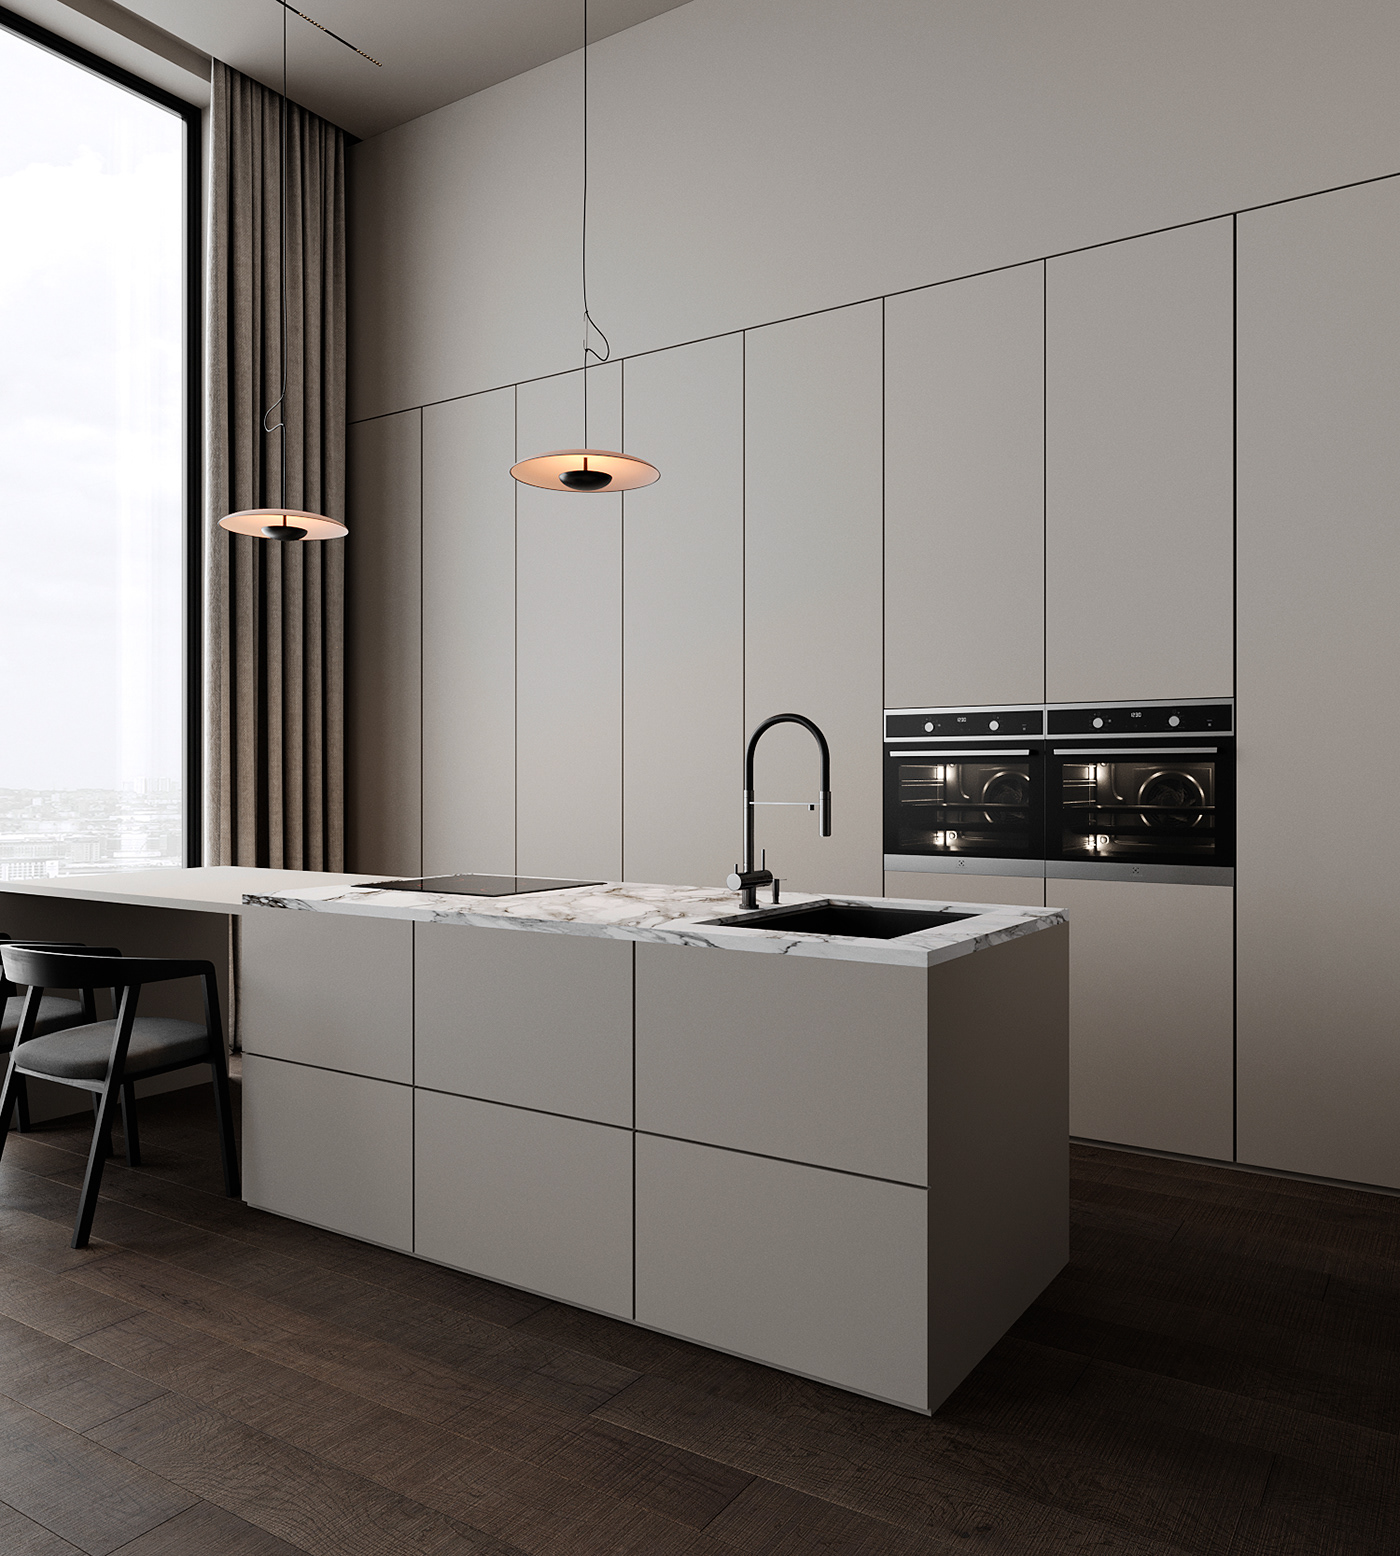 Interior interiordesign CGI visualization 3ds max rendering kitchen living room apartment